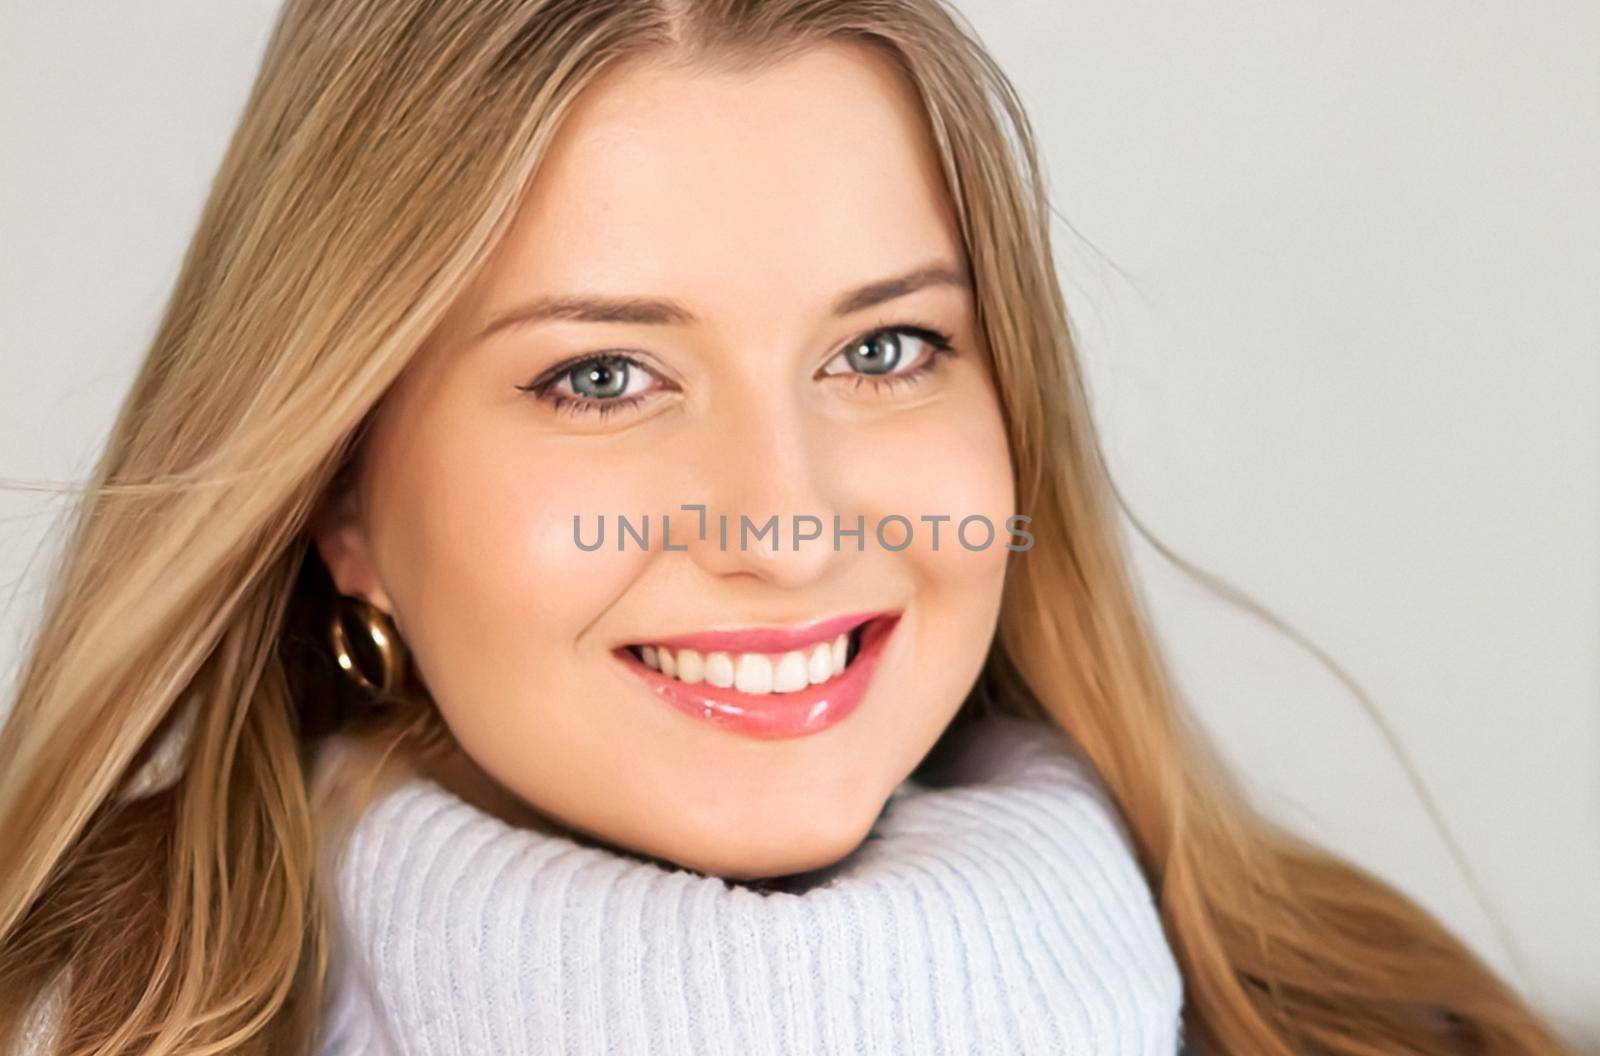 Autumn winter fashion and knitwear, beautiful woman wearing warm knitted sweater, close-up portrait